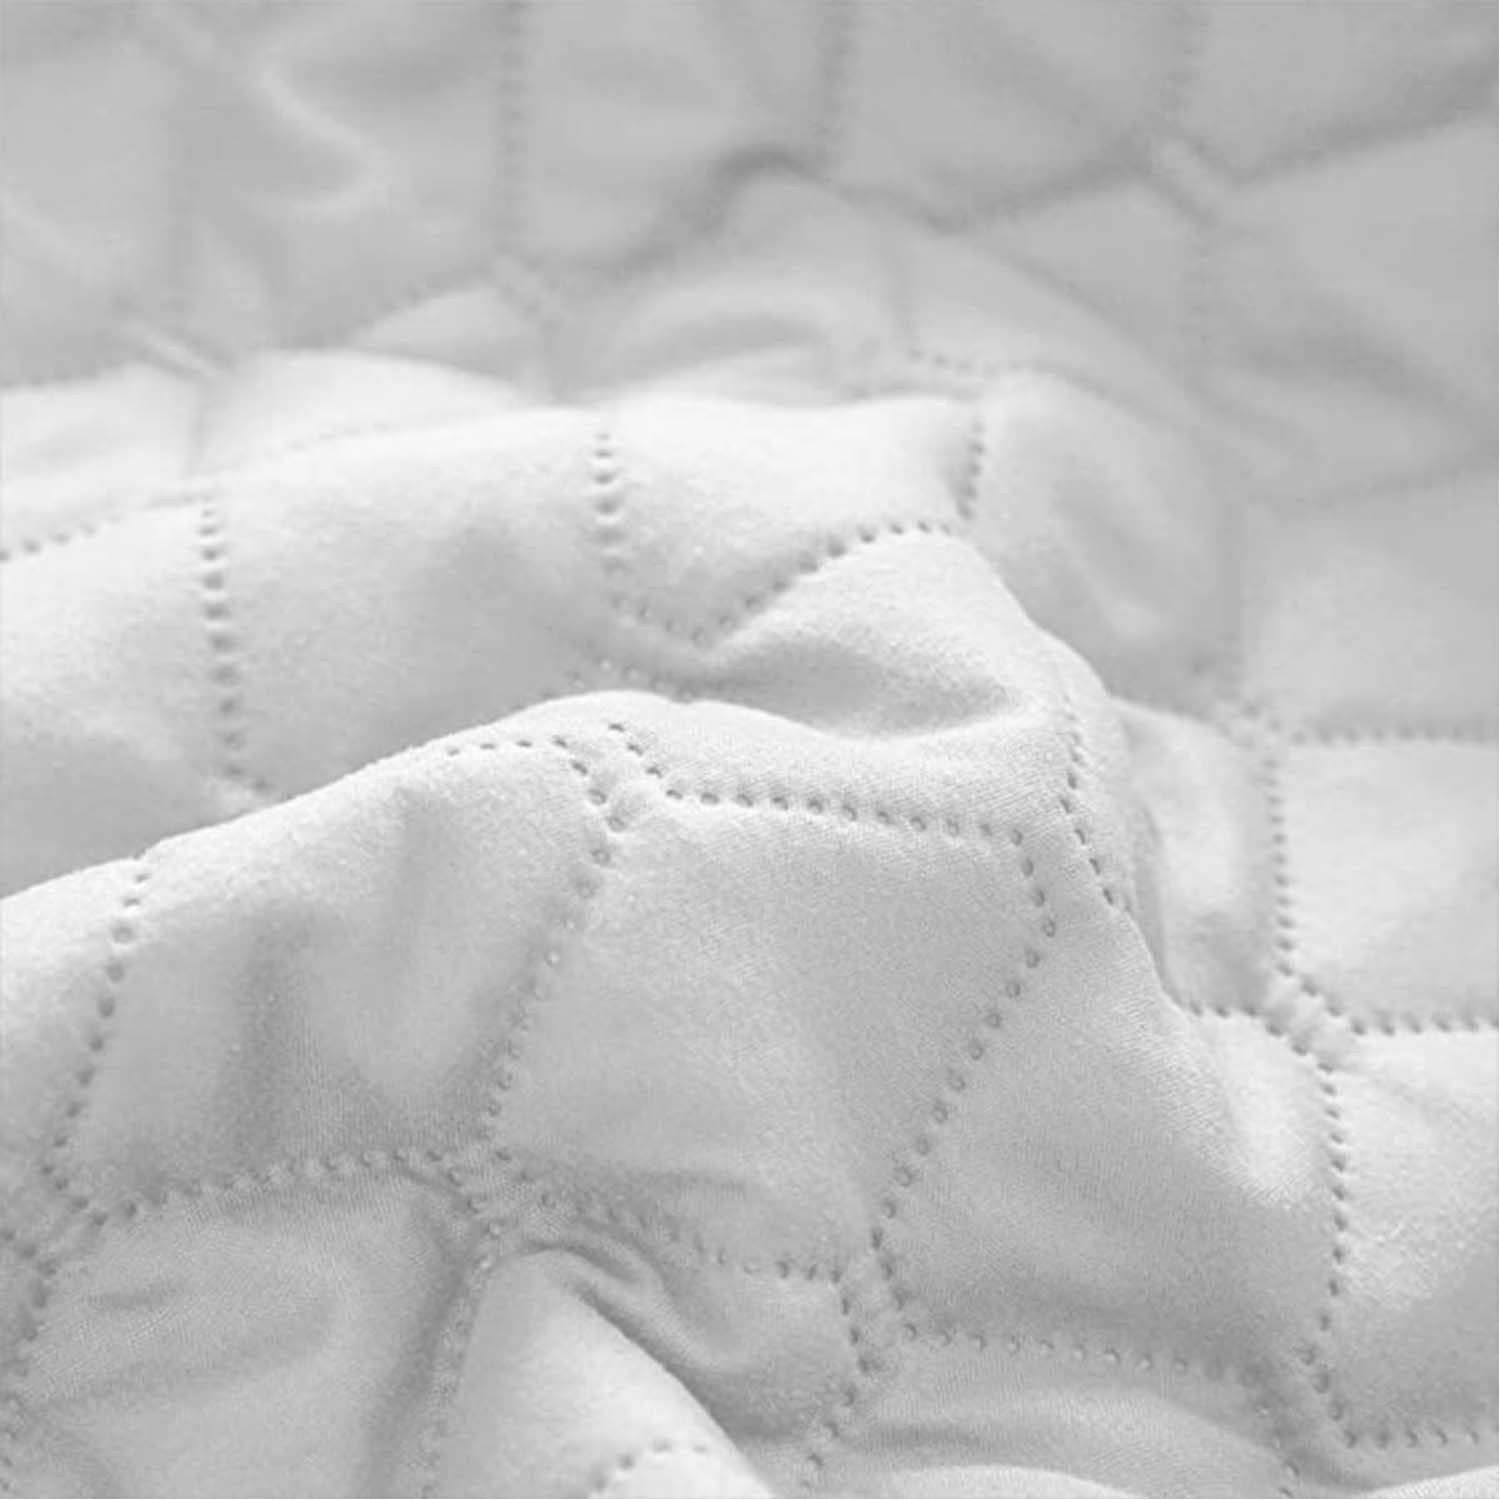 Protector cama sencilla Impermeable Larga vida 100 cm x 190 cm x 20 cm